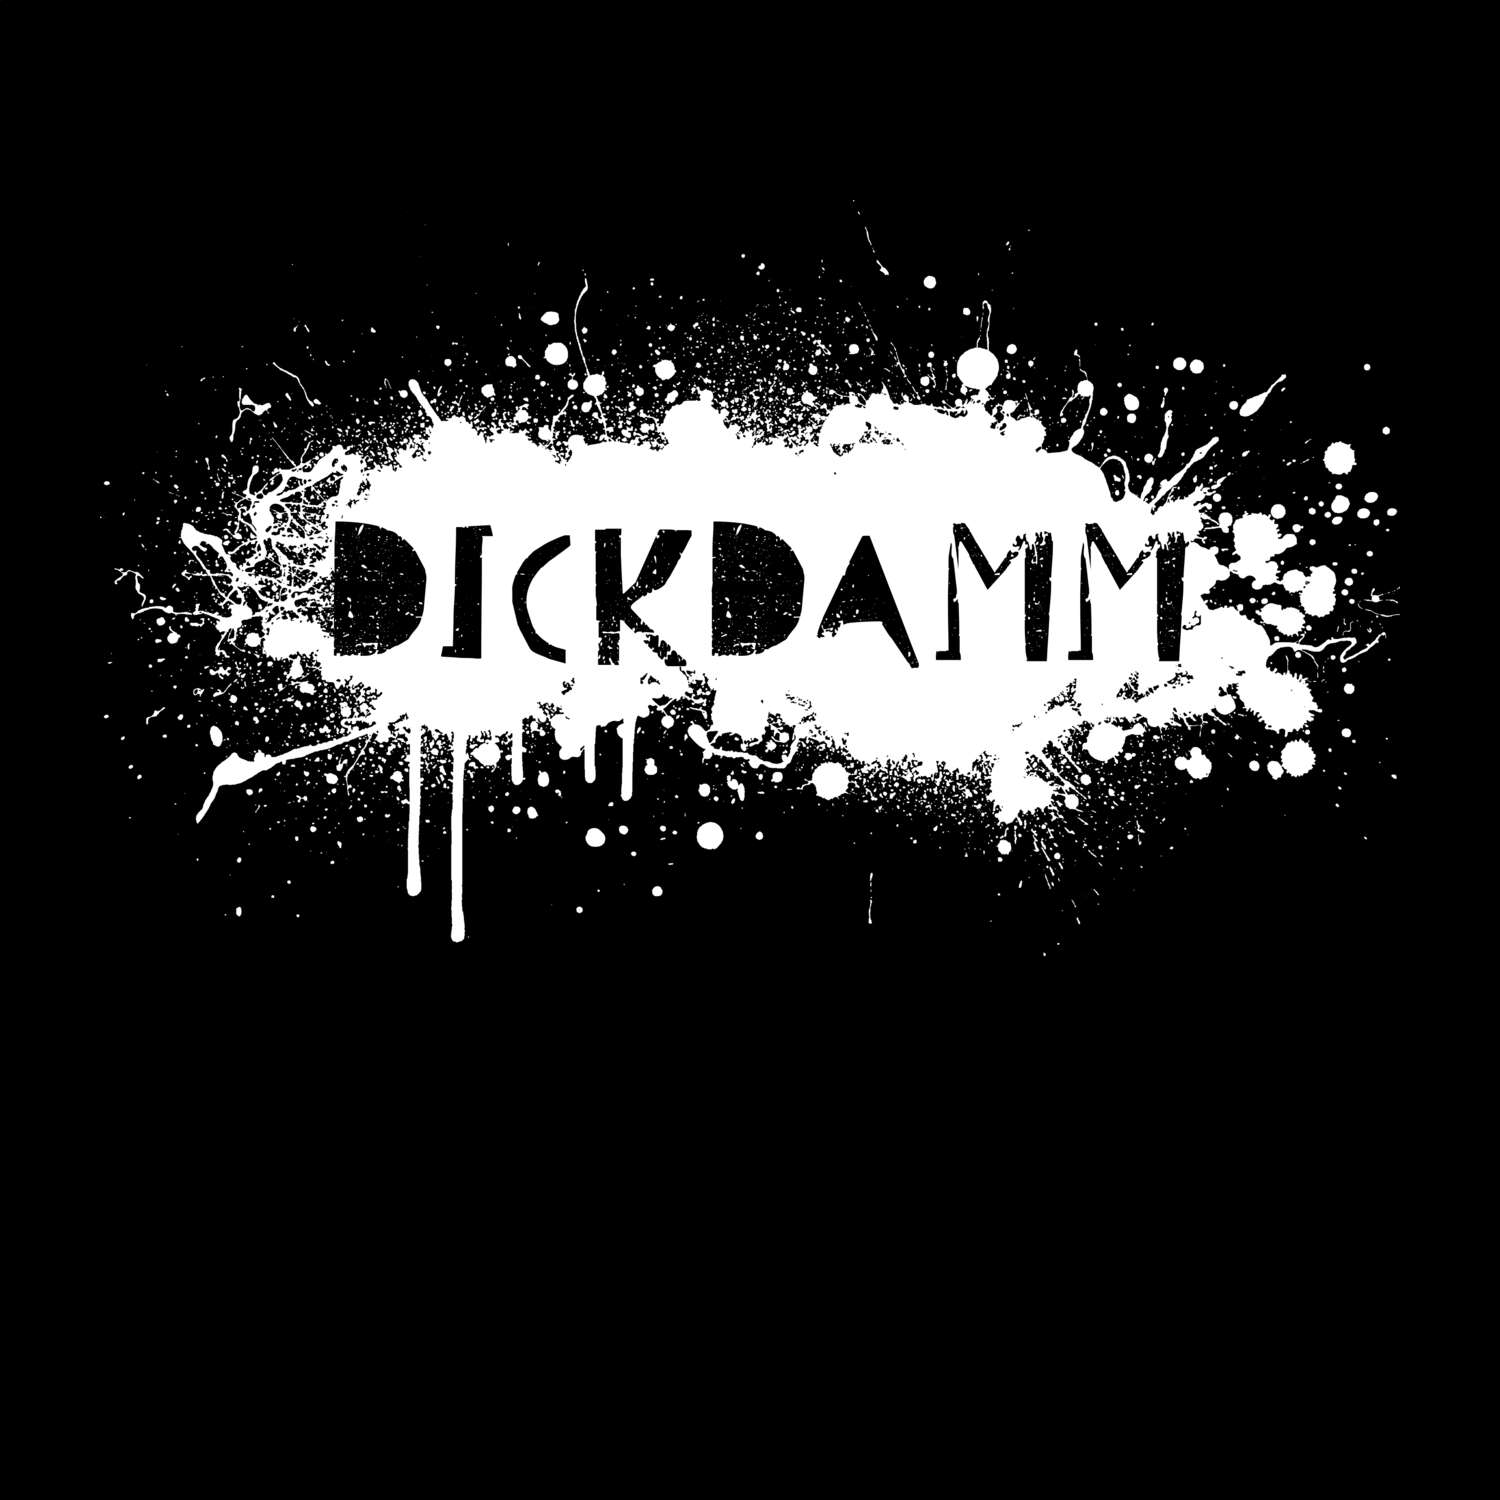 Dickdamm T-Shirt »Paint Splash Punk«